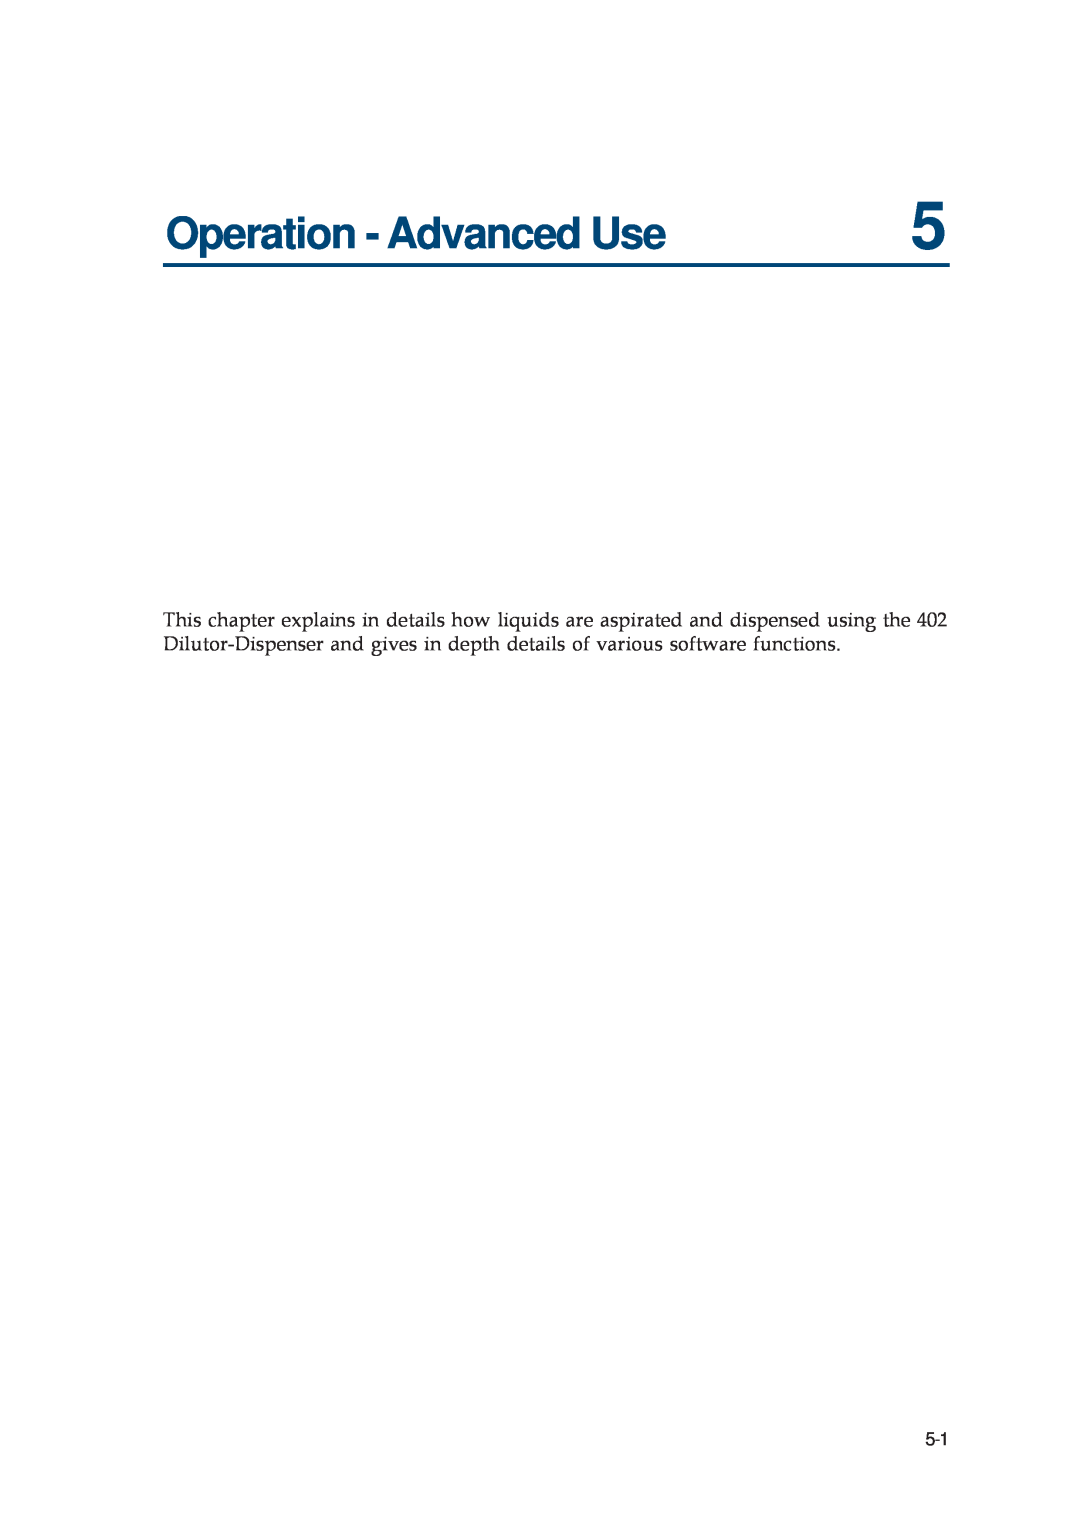 Gilson 402 manual Operation - Advanced Use 